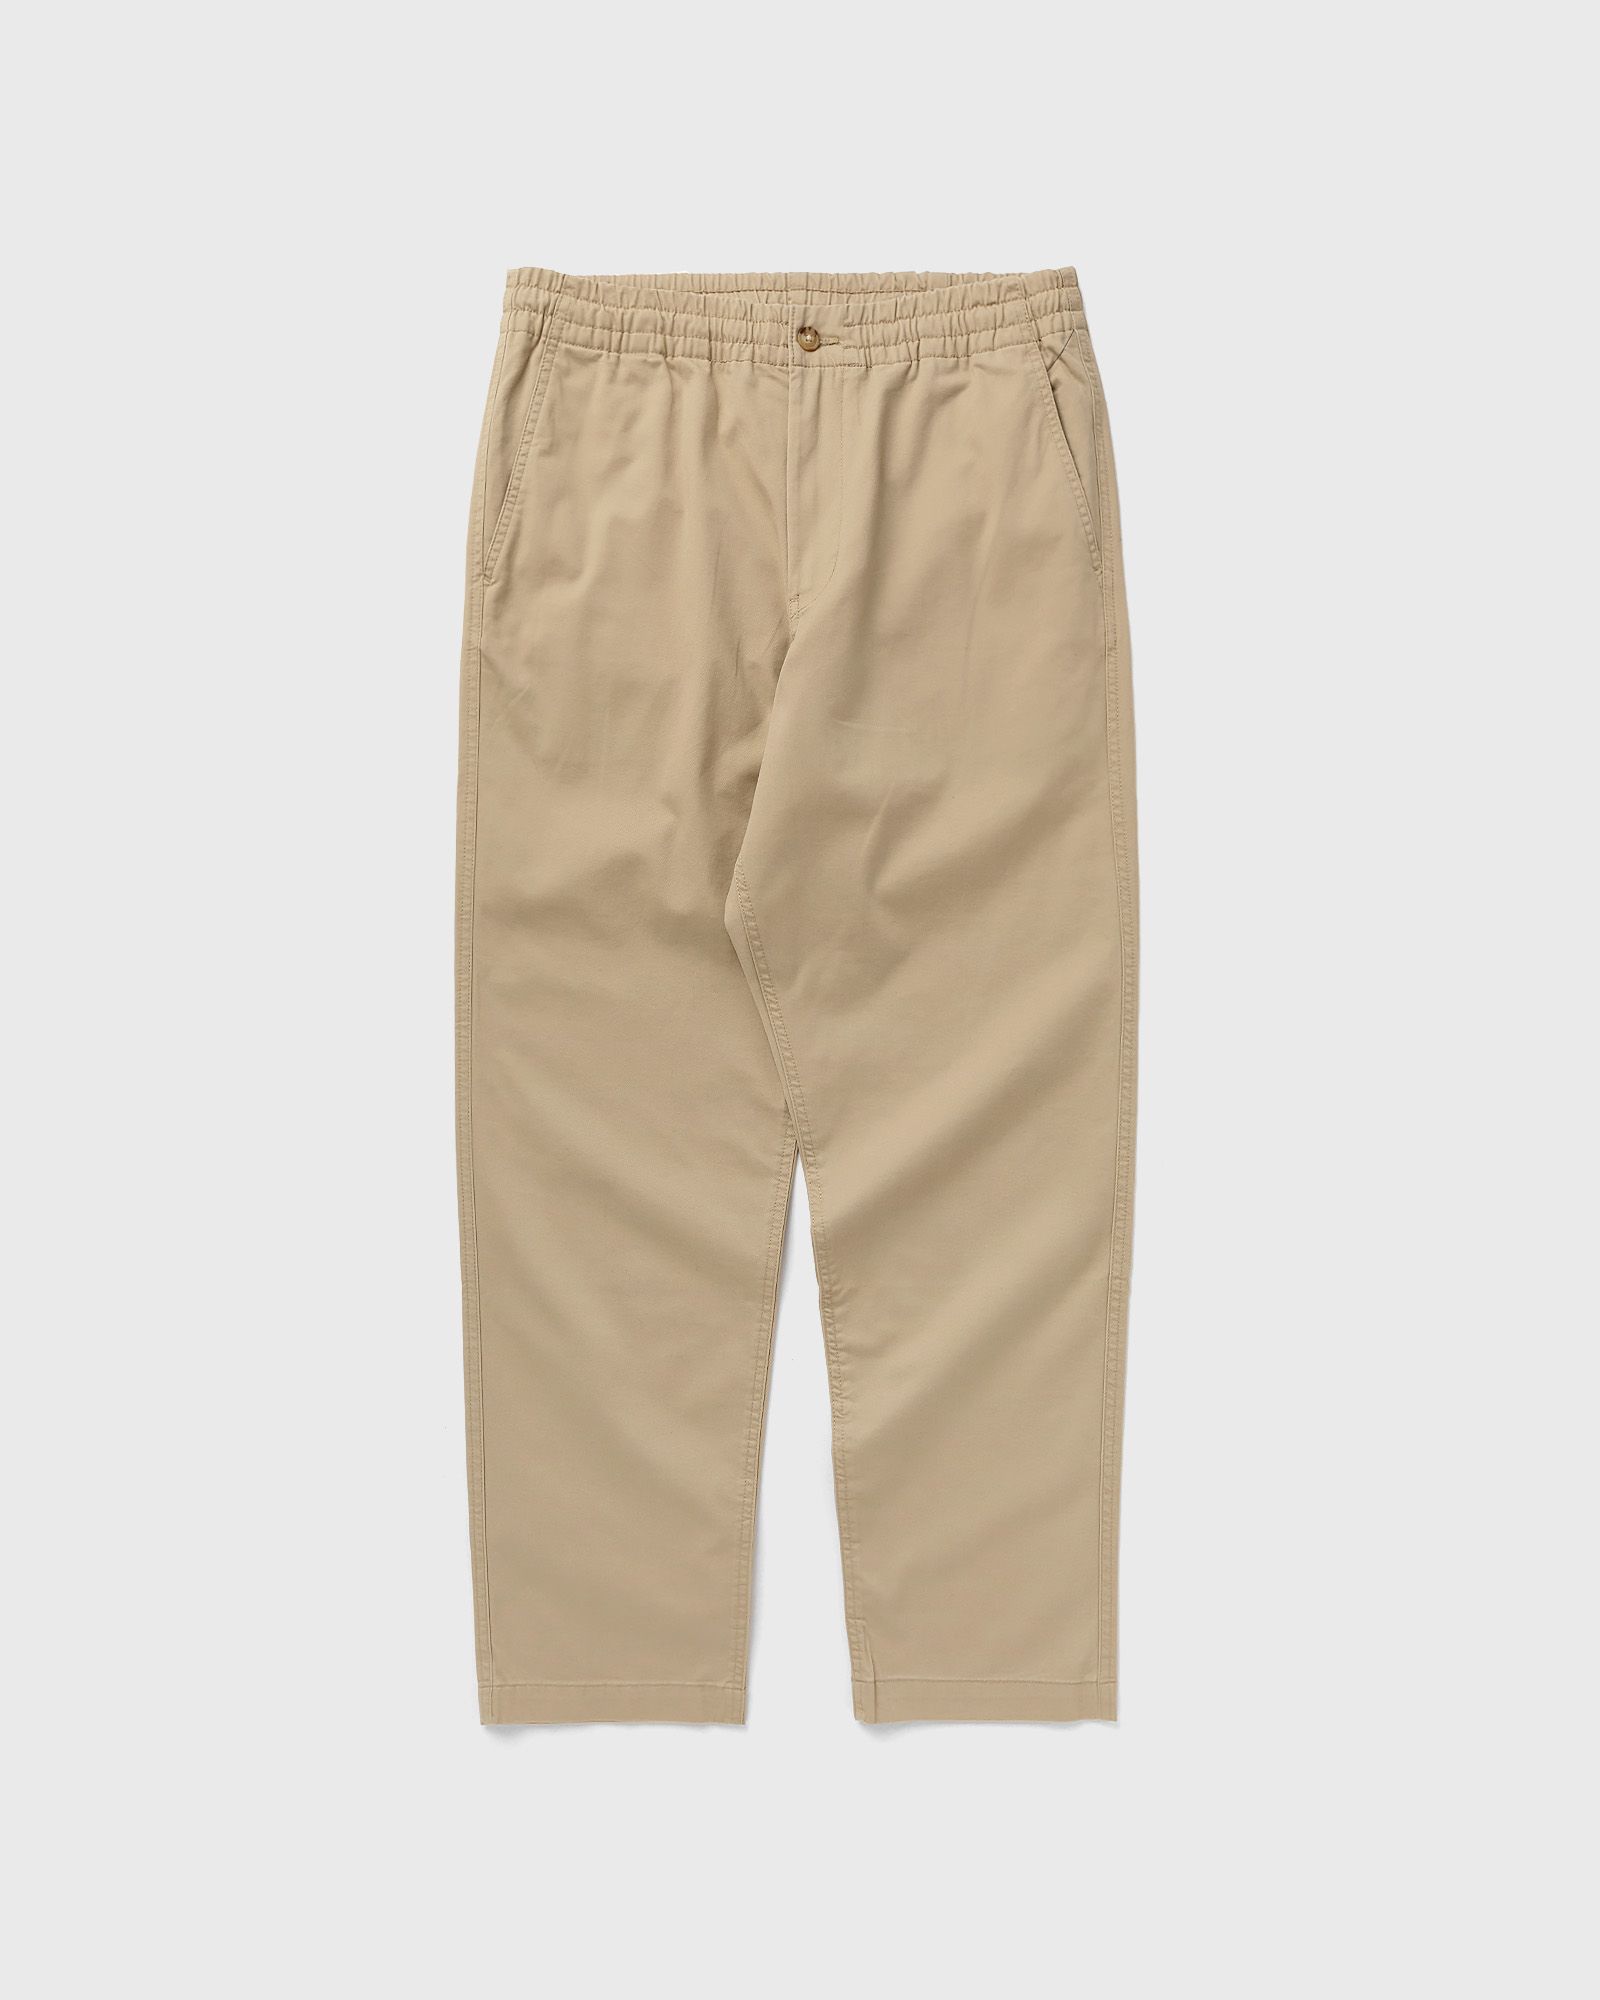 Polo Ralph Lauren - cfprepsterp-flat-pant men casual pants beige in größe:l